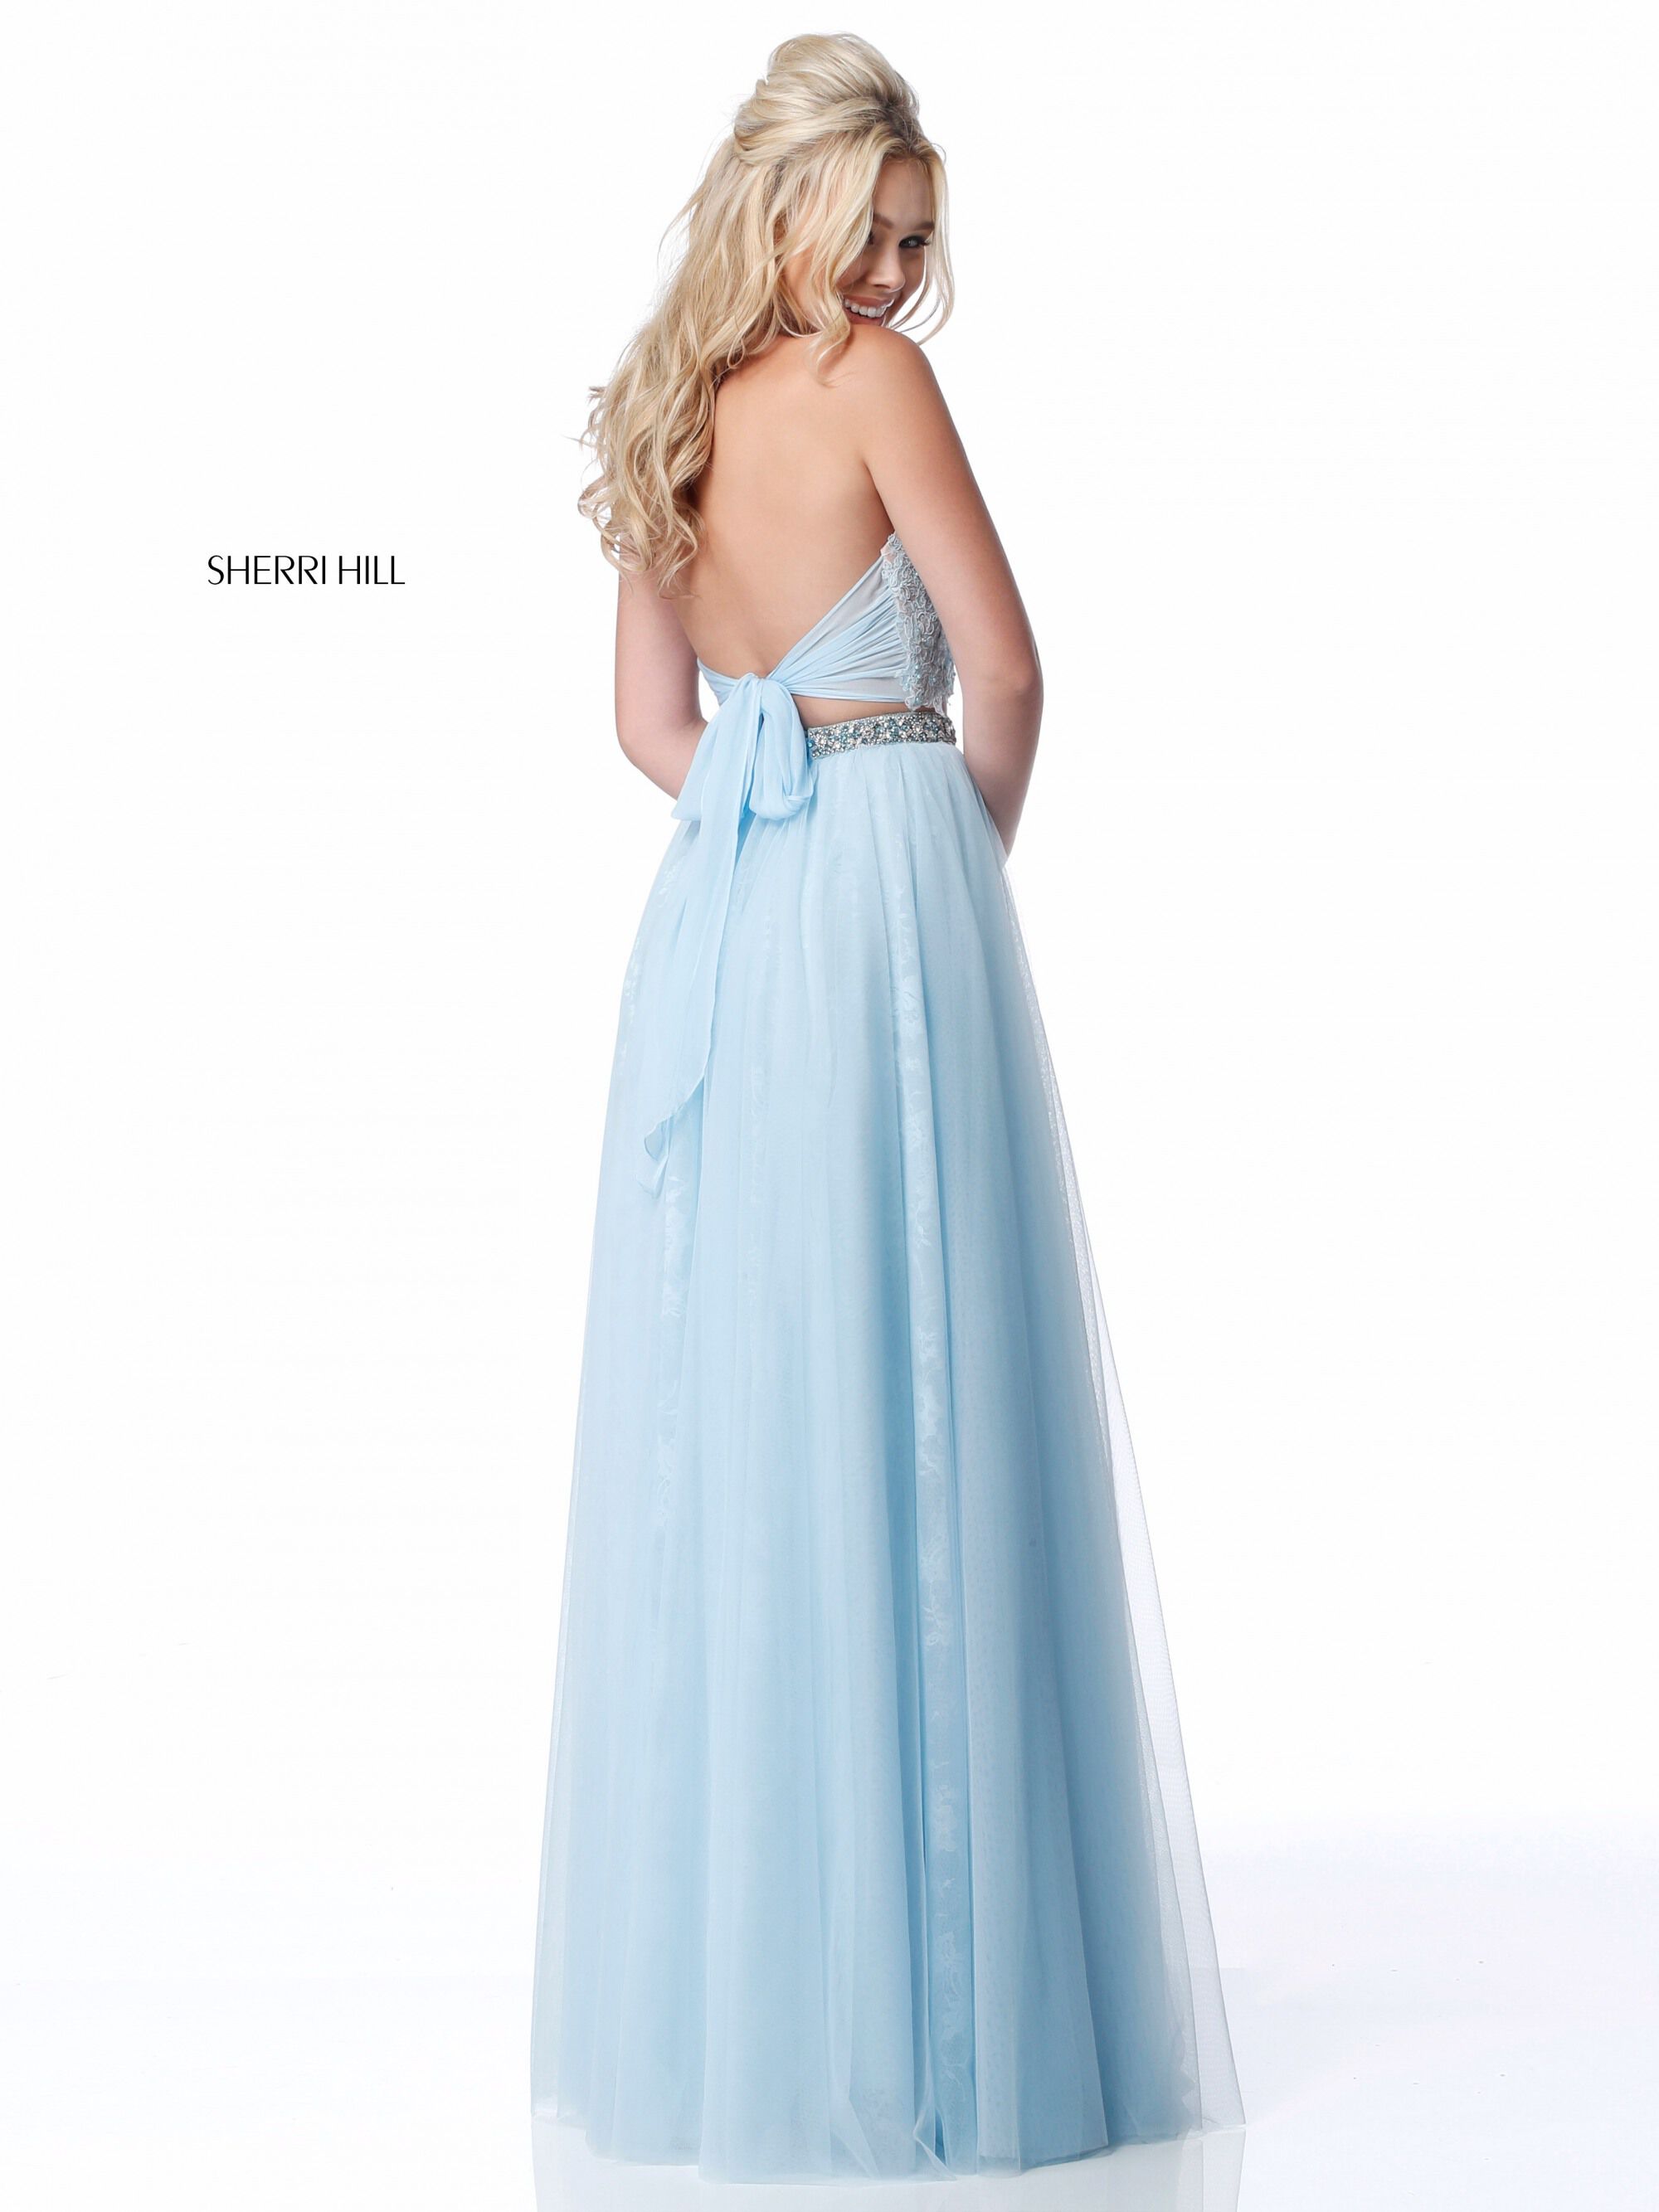 Buy dress style № 51924 designed by SherriHill